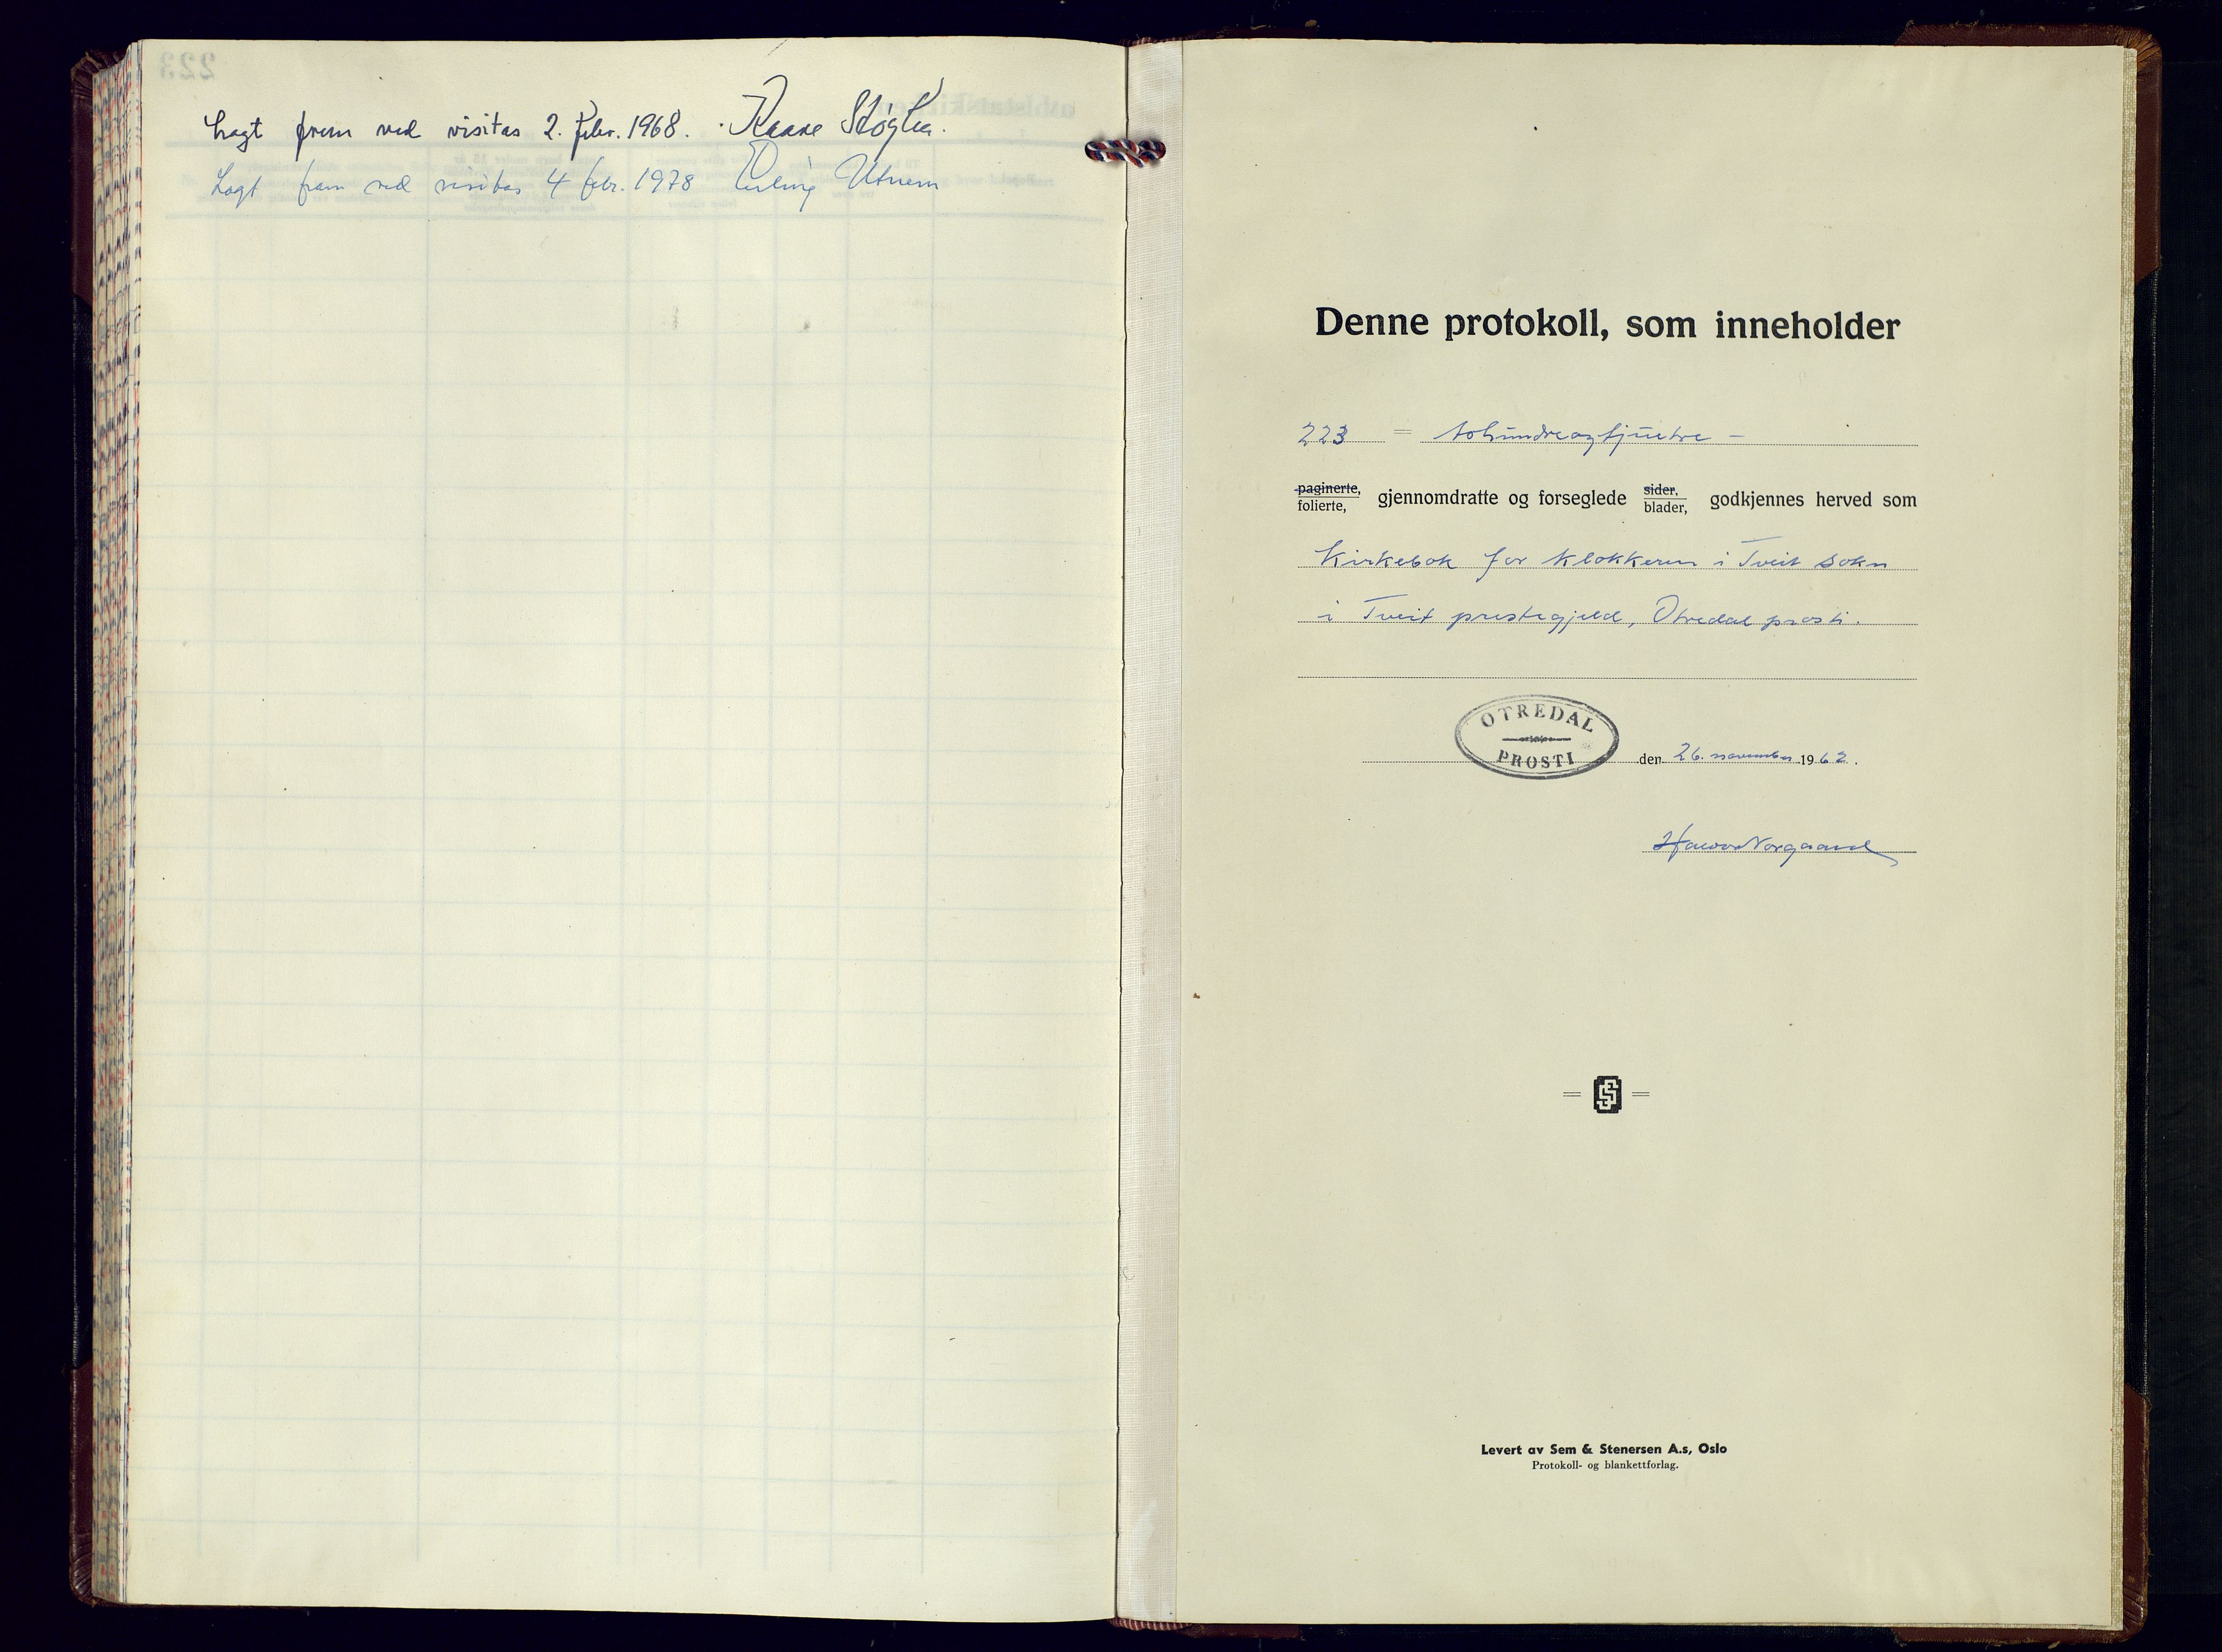 Tveit sokneprestkontor, SAK/1111-0043/F/Fb/L0007: Parish register (copy) no. B-7, 1962-1975